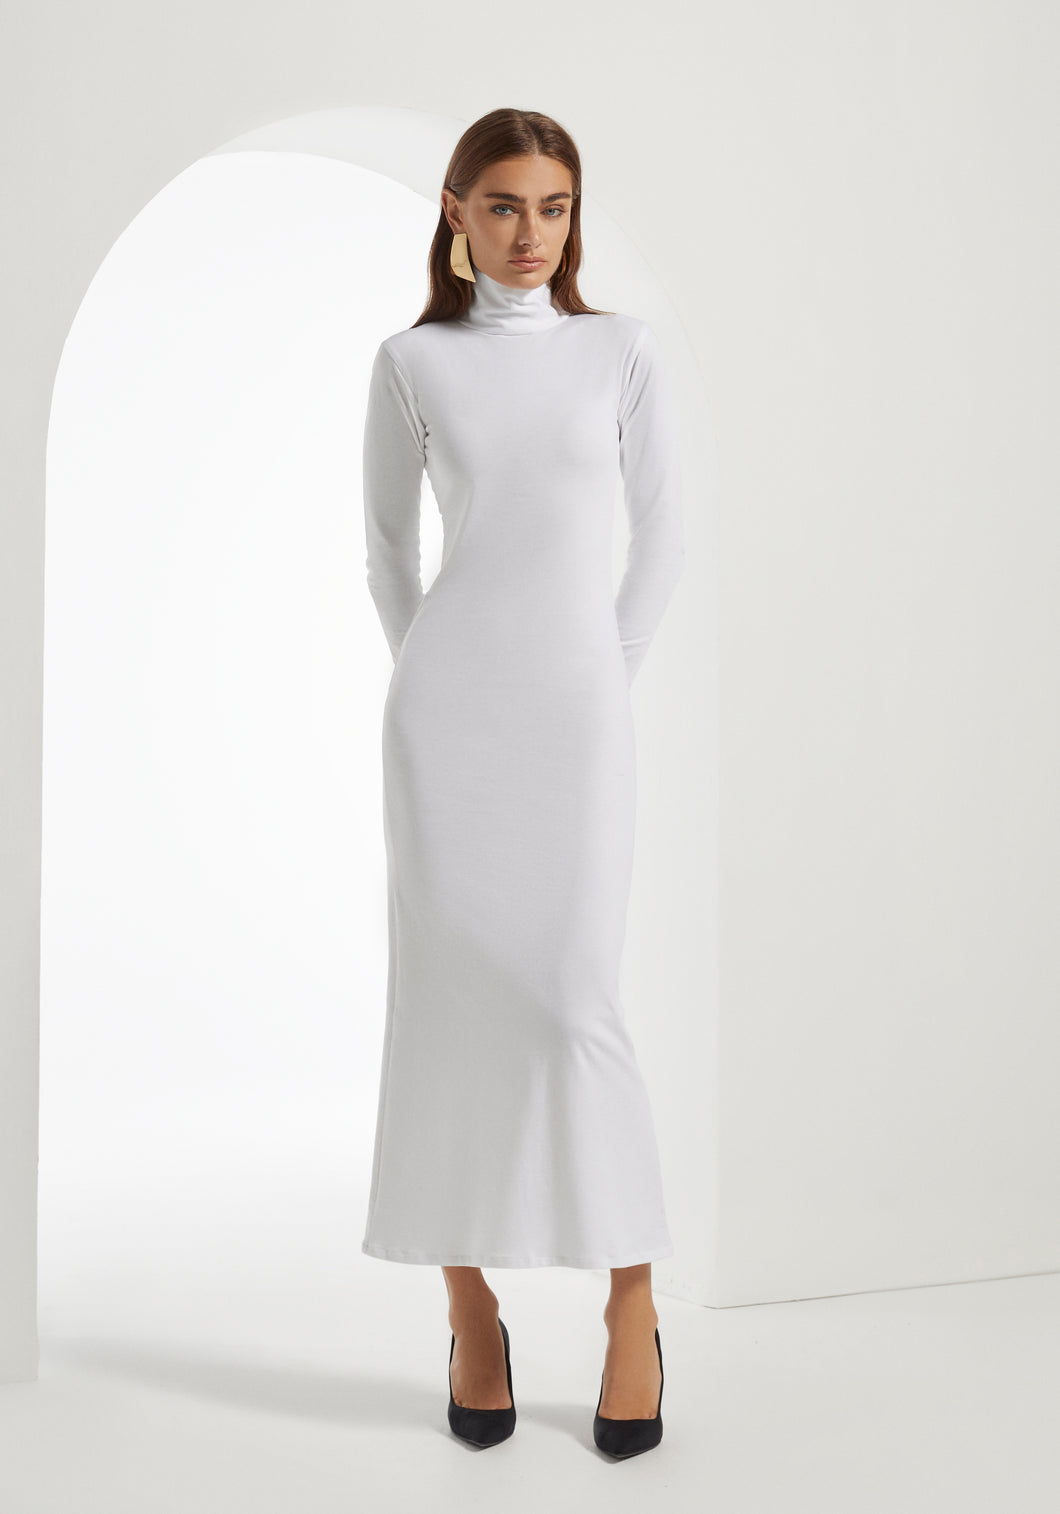 White Turtleneck Dress